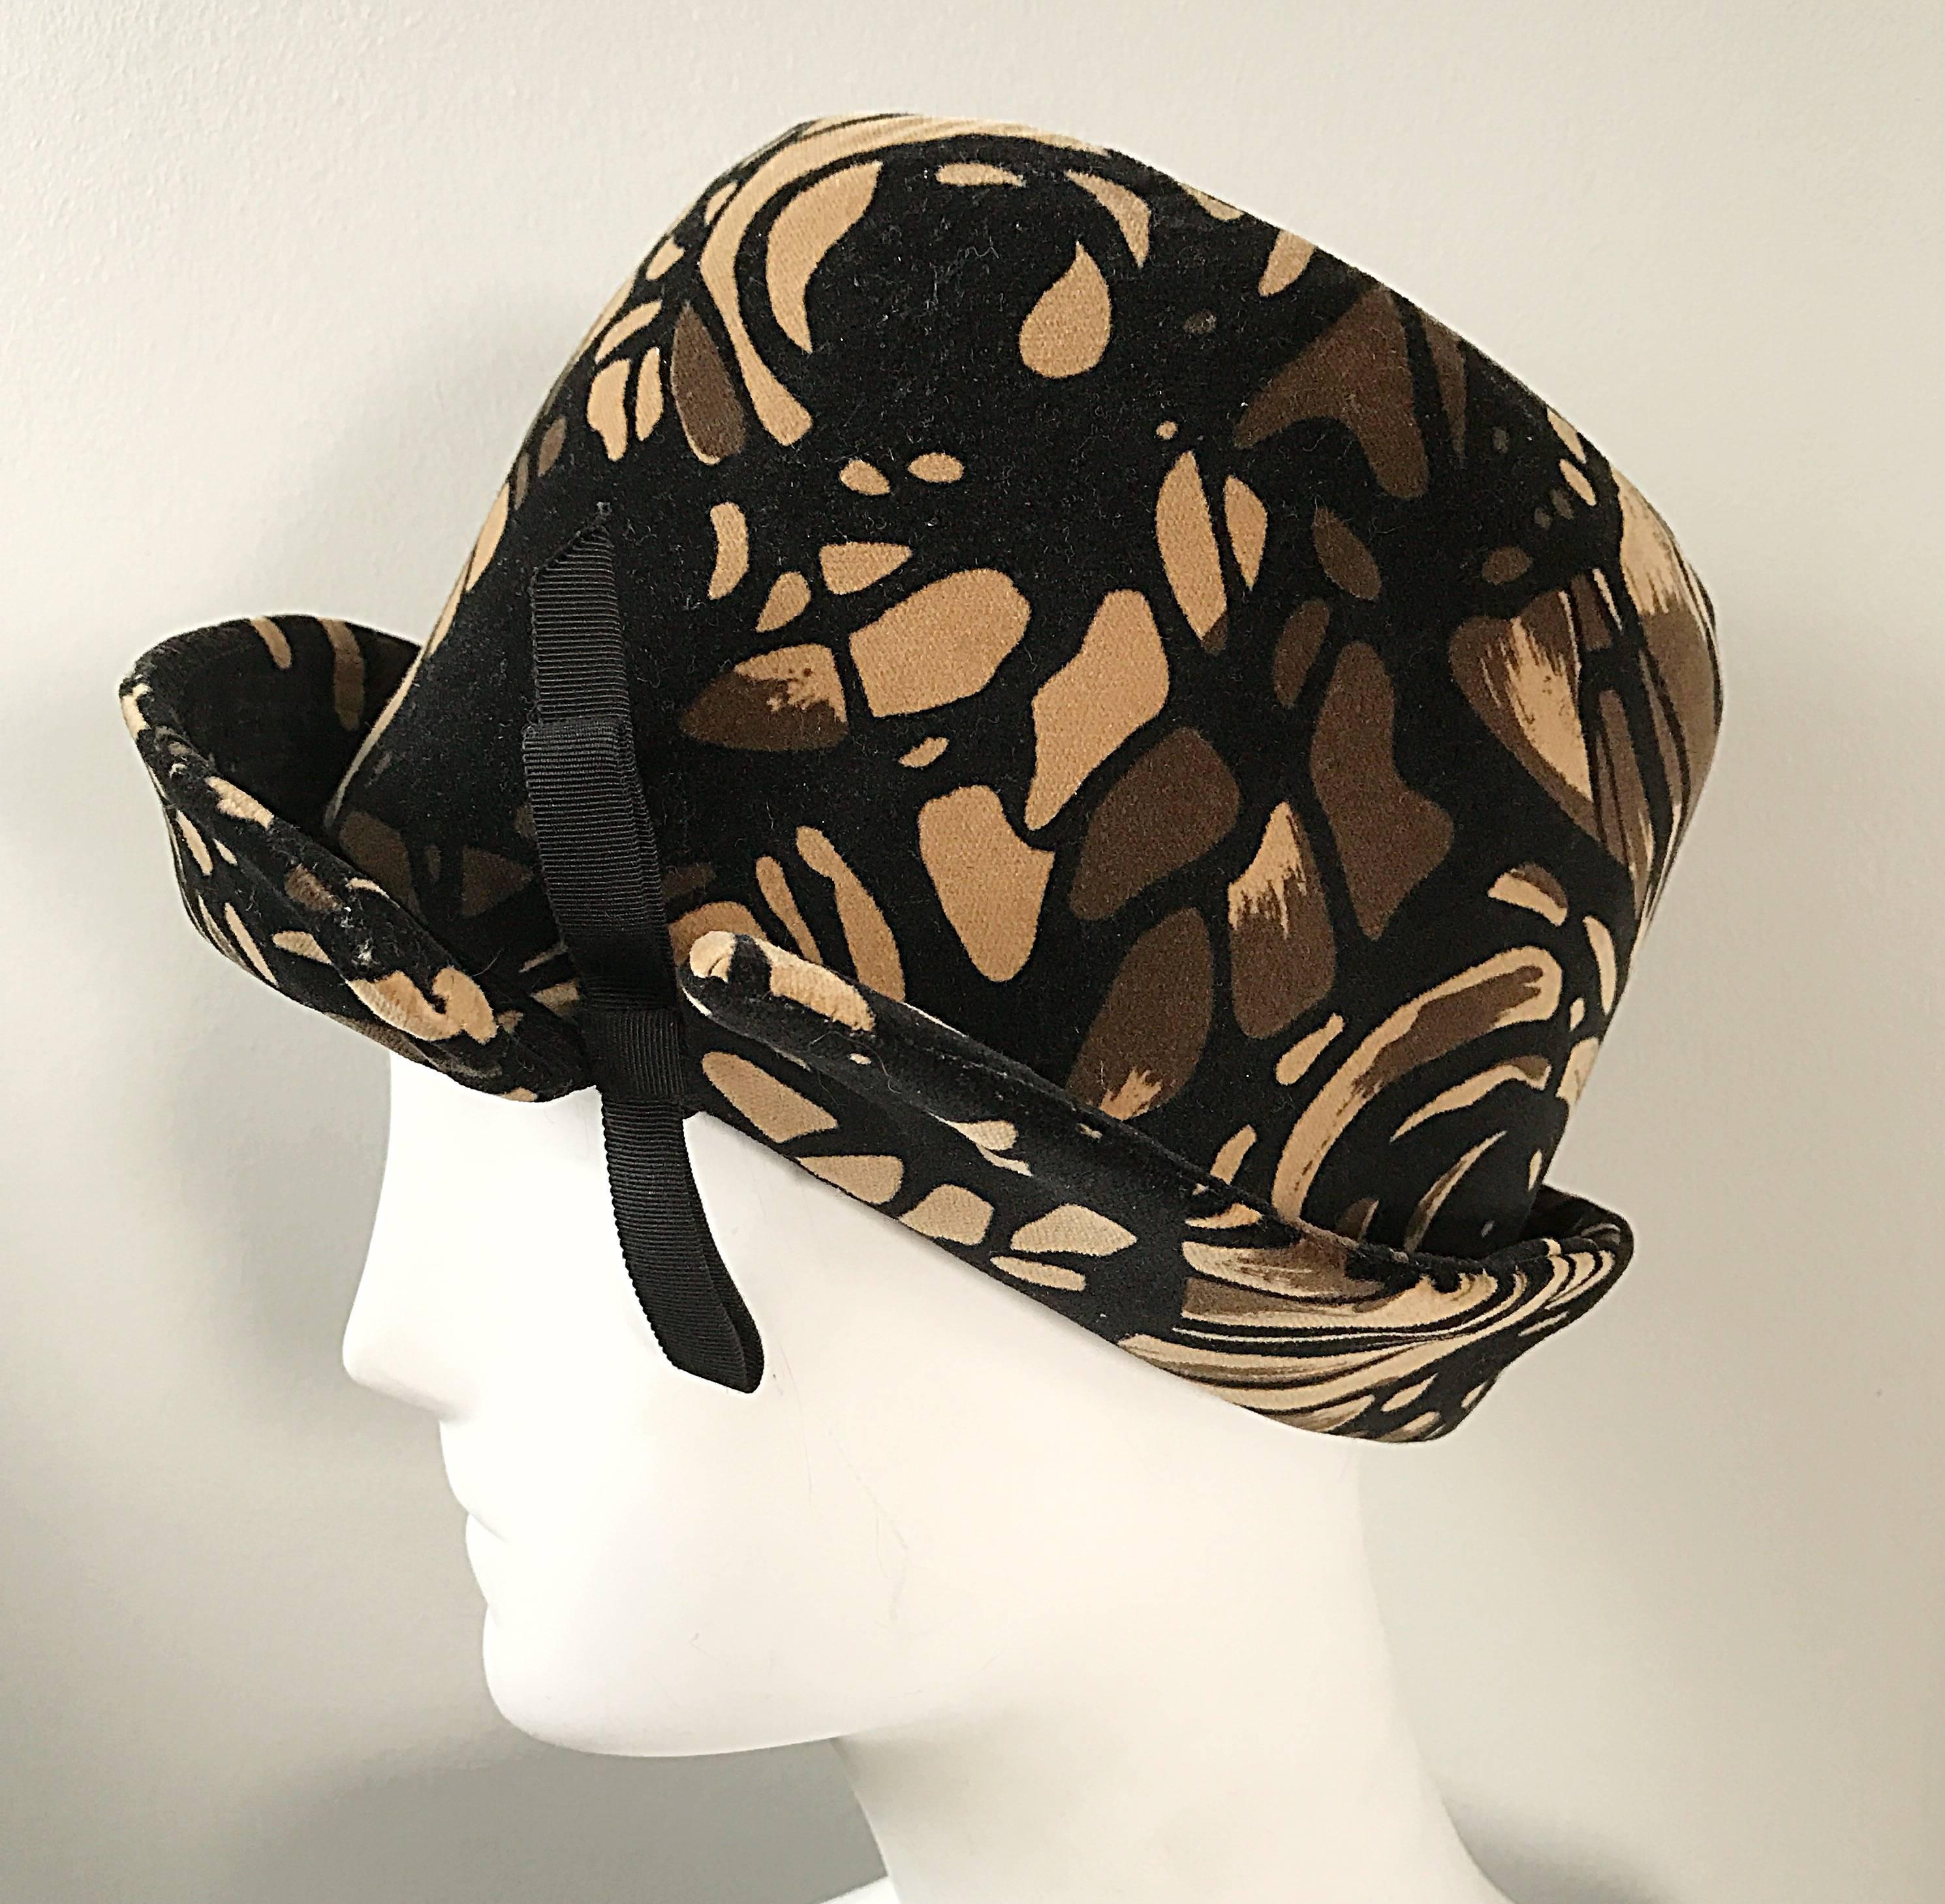 60s hat styles